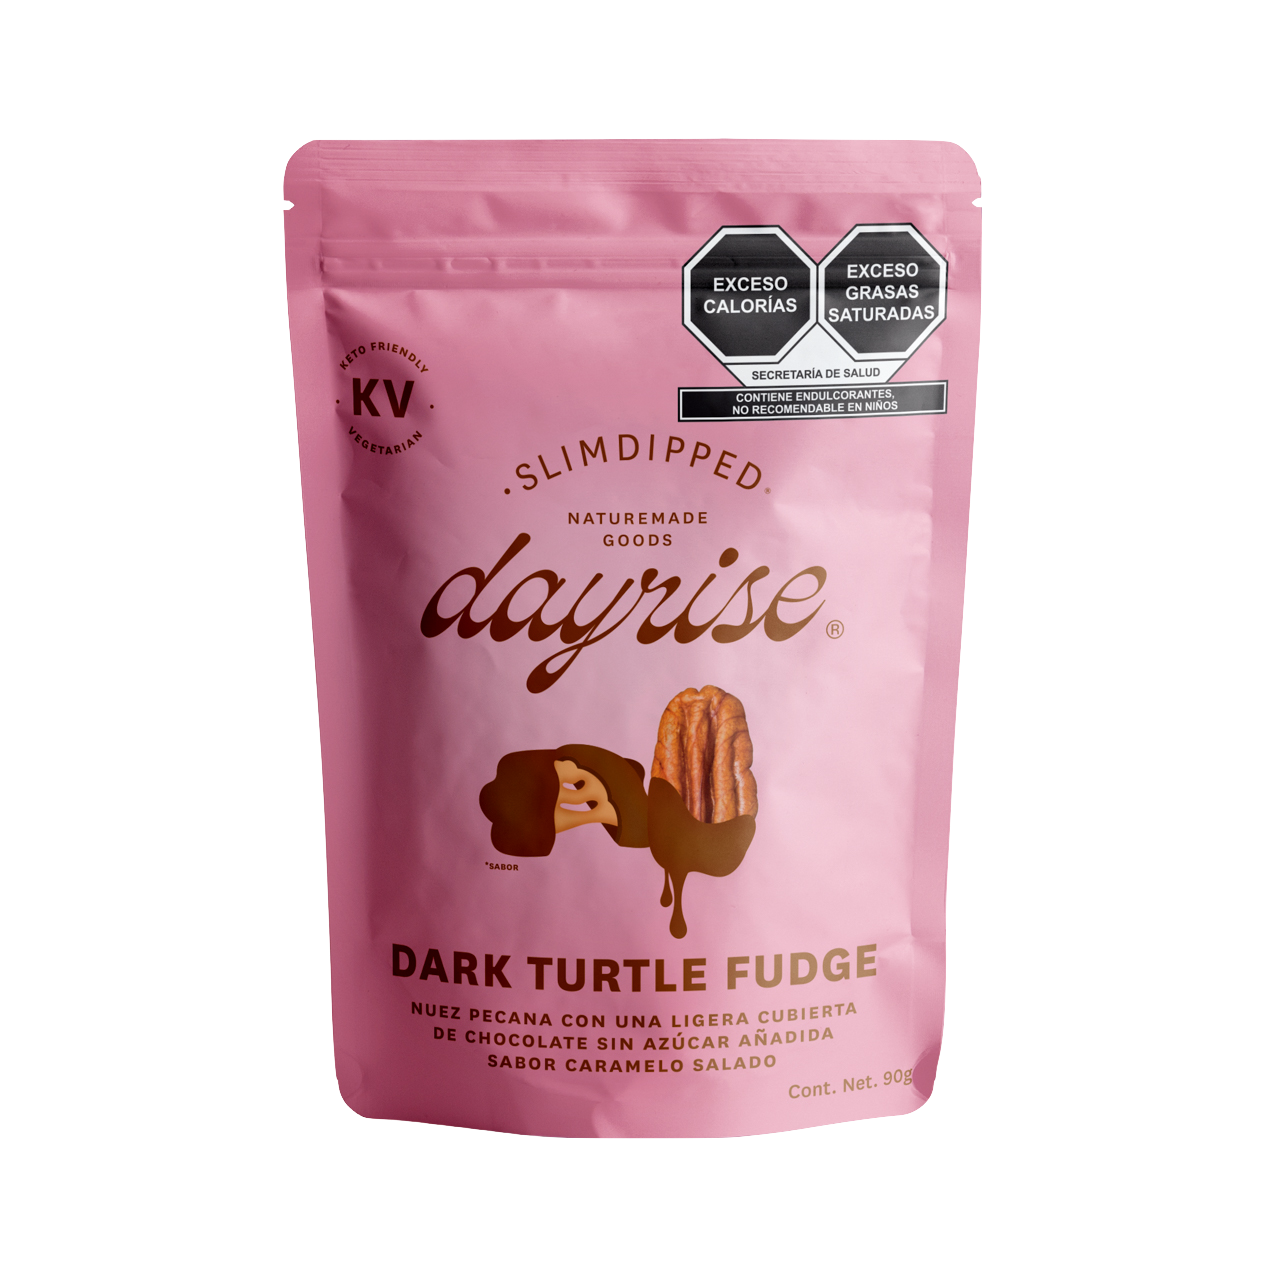 Dark Turtle Fudge